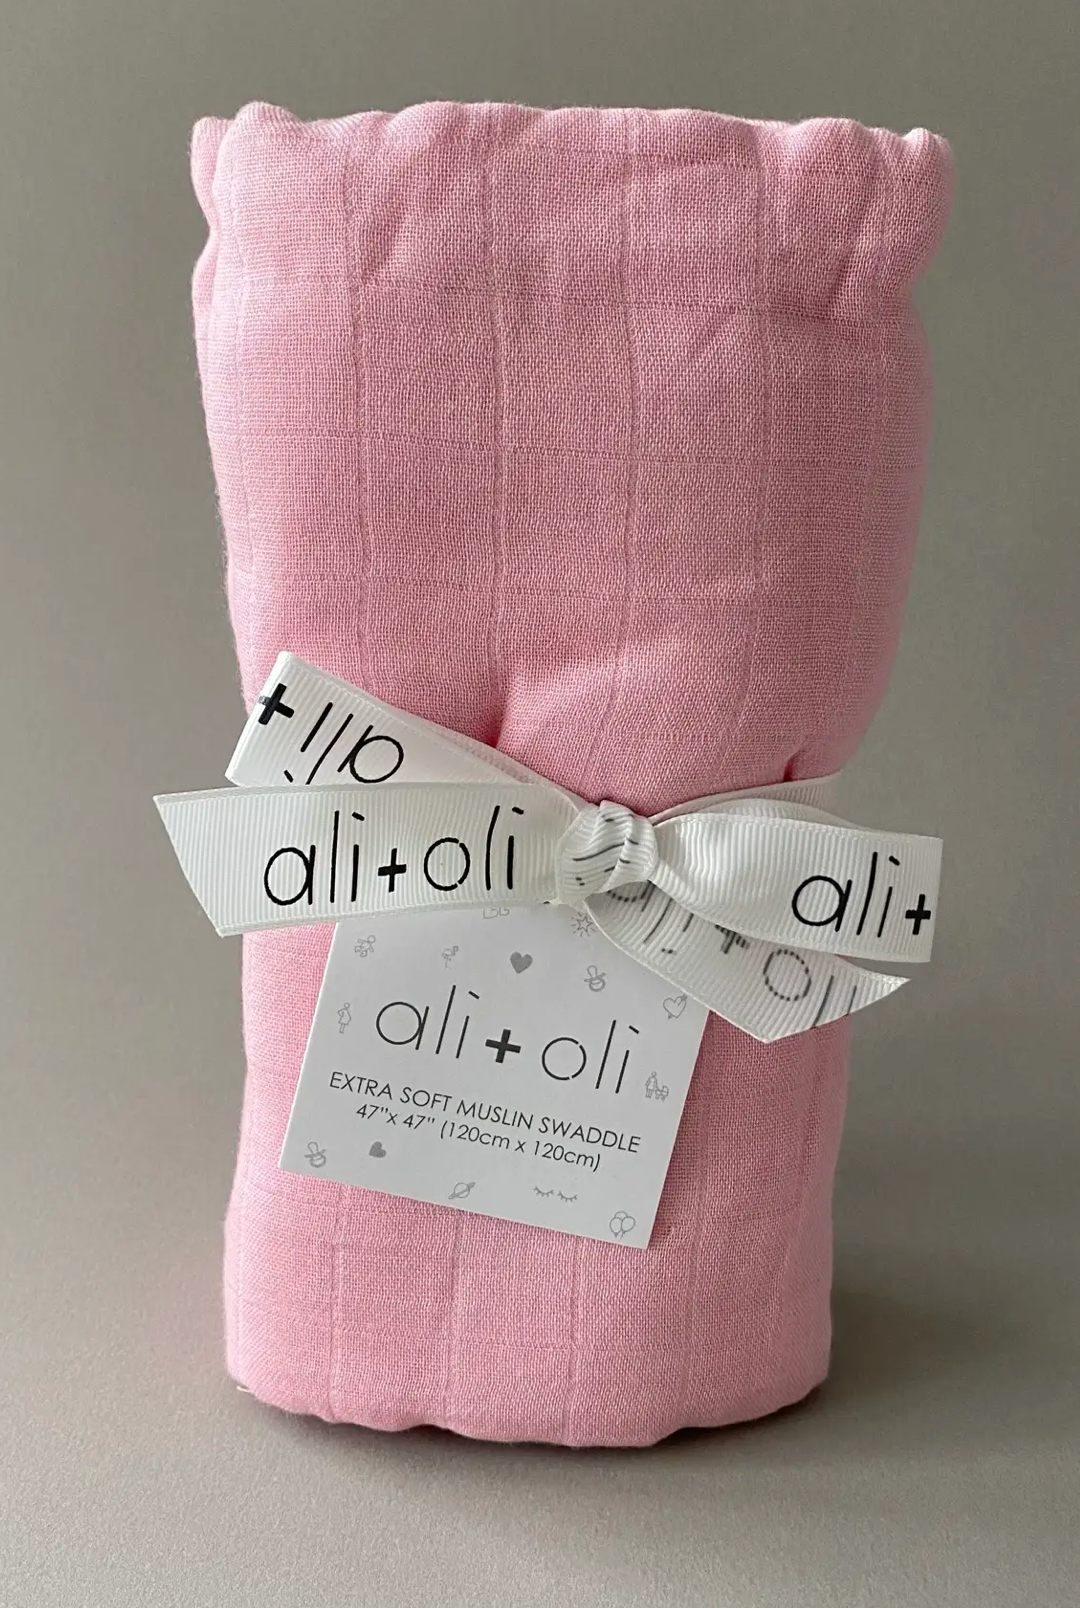 Pink Muslin Swaddle Blanket - Clothe Boutique